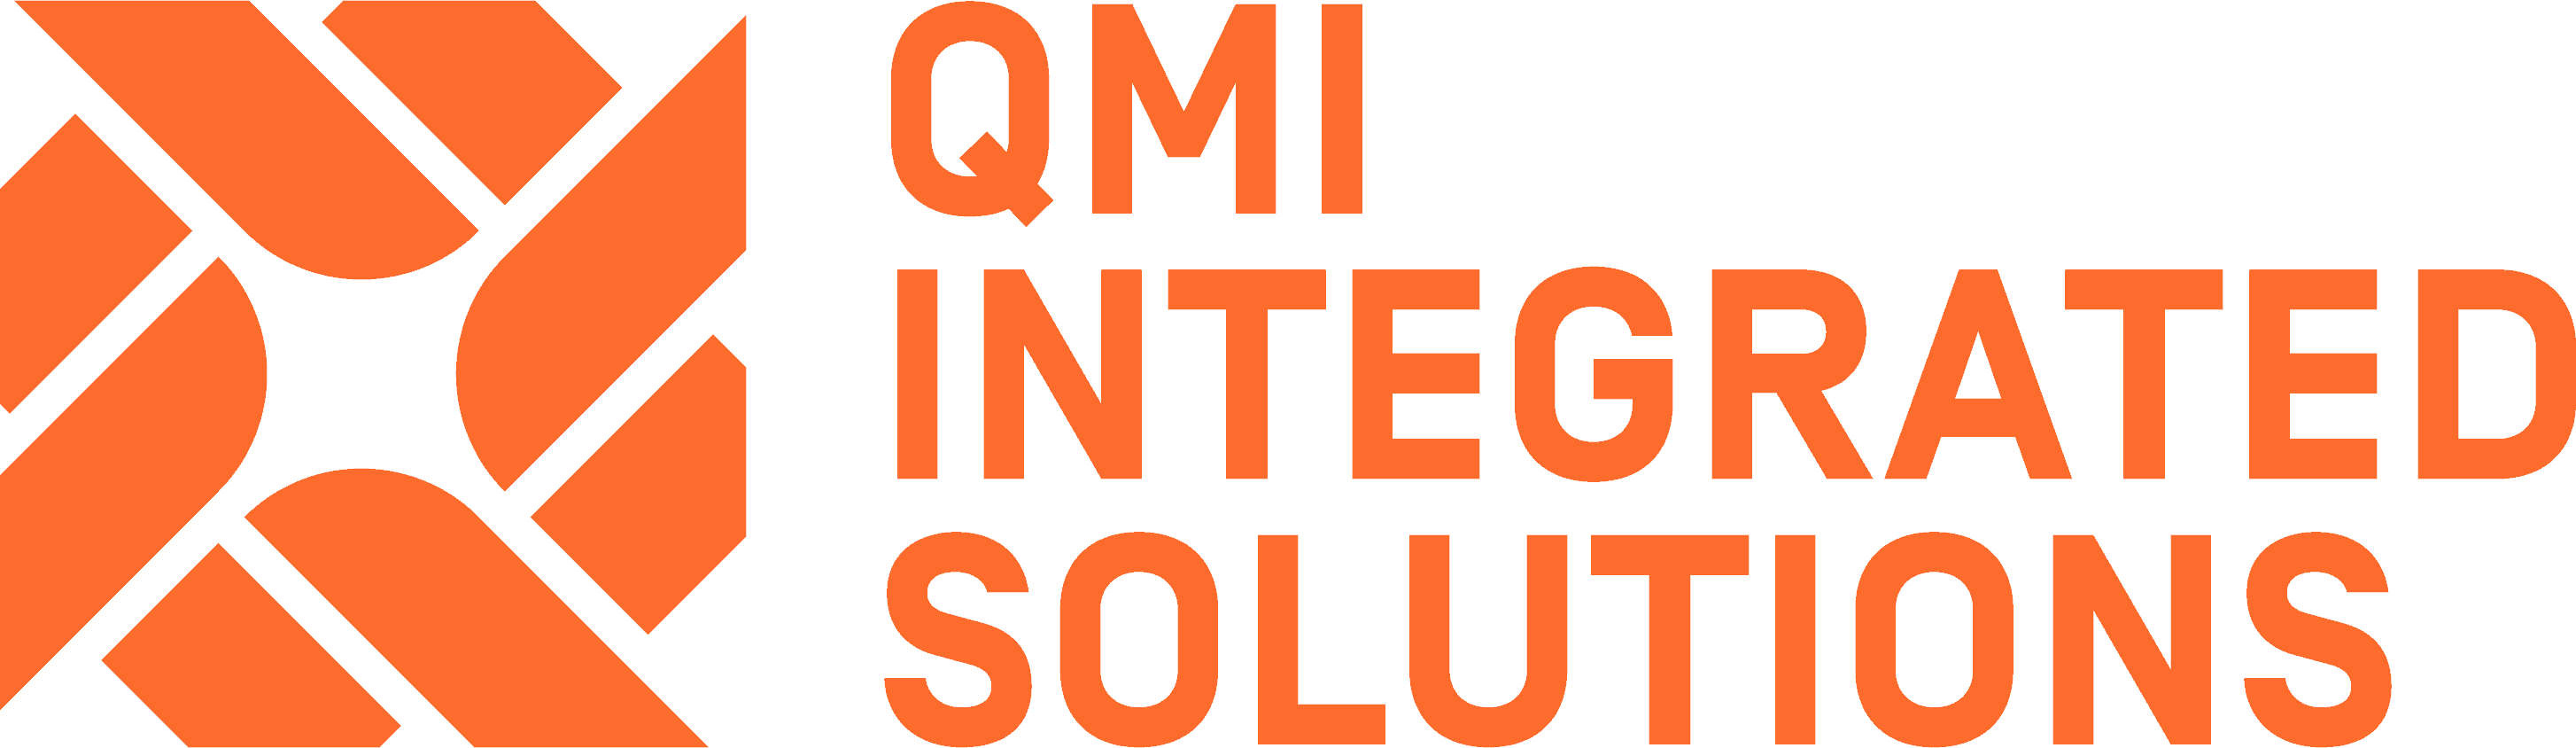 QMI Logo Orange with Text